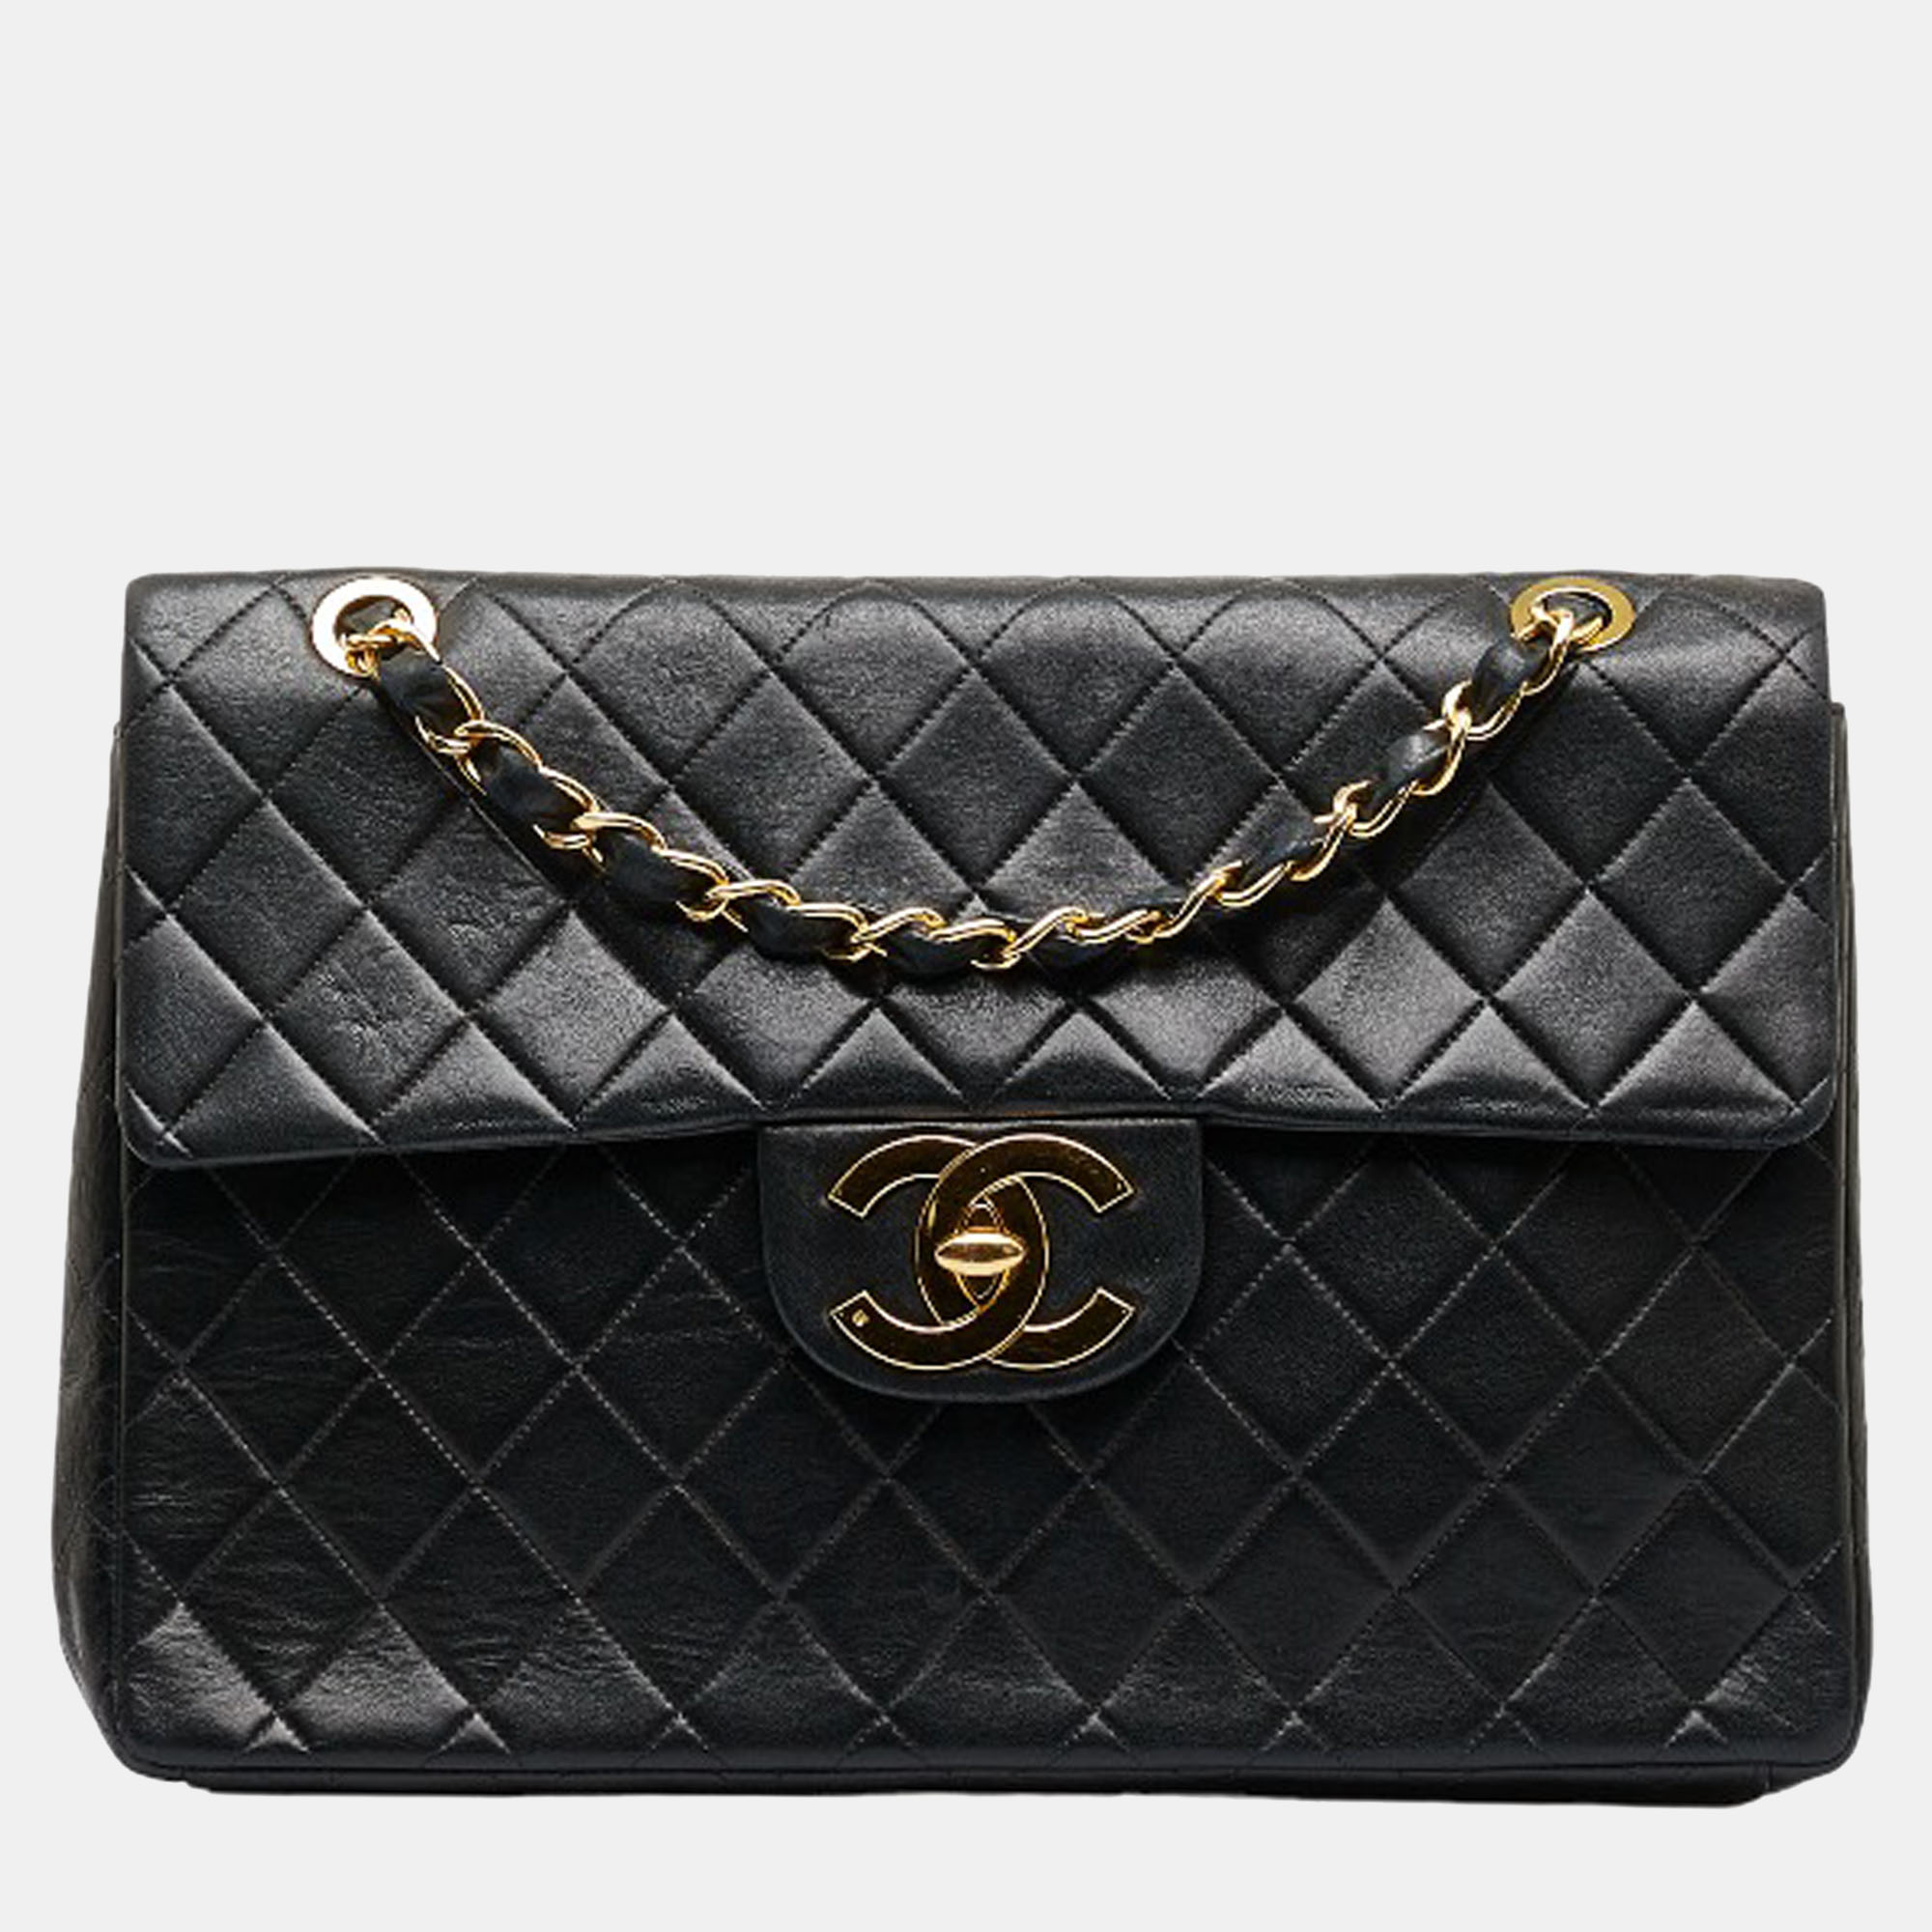 Chanel black leather maxi classic single flap shoulder bag